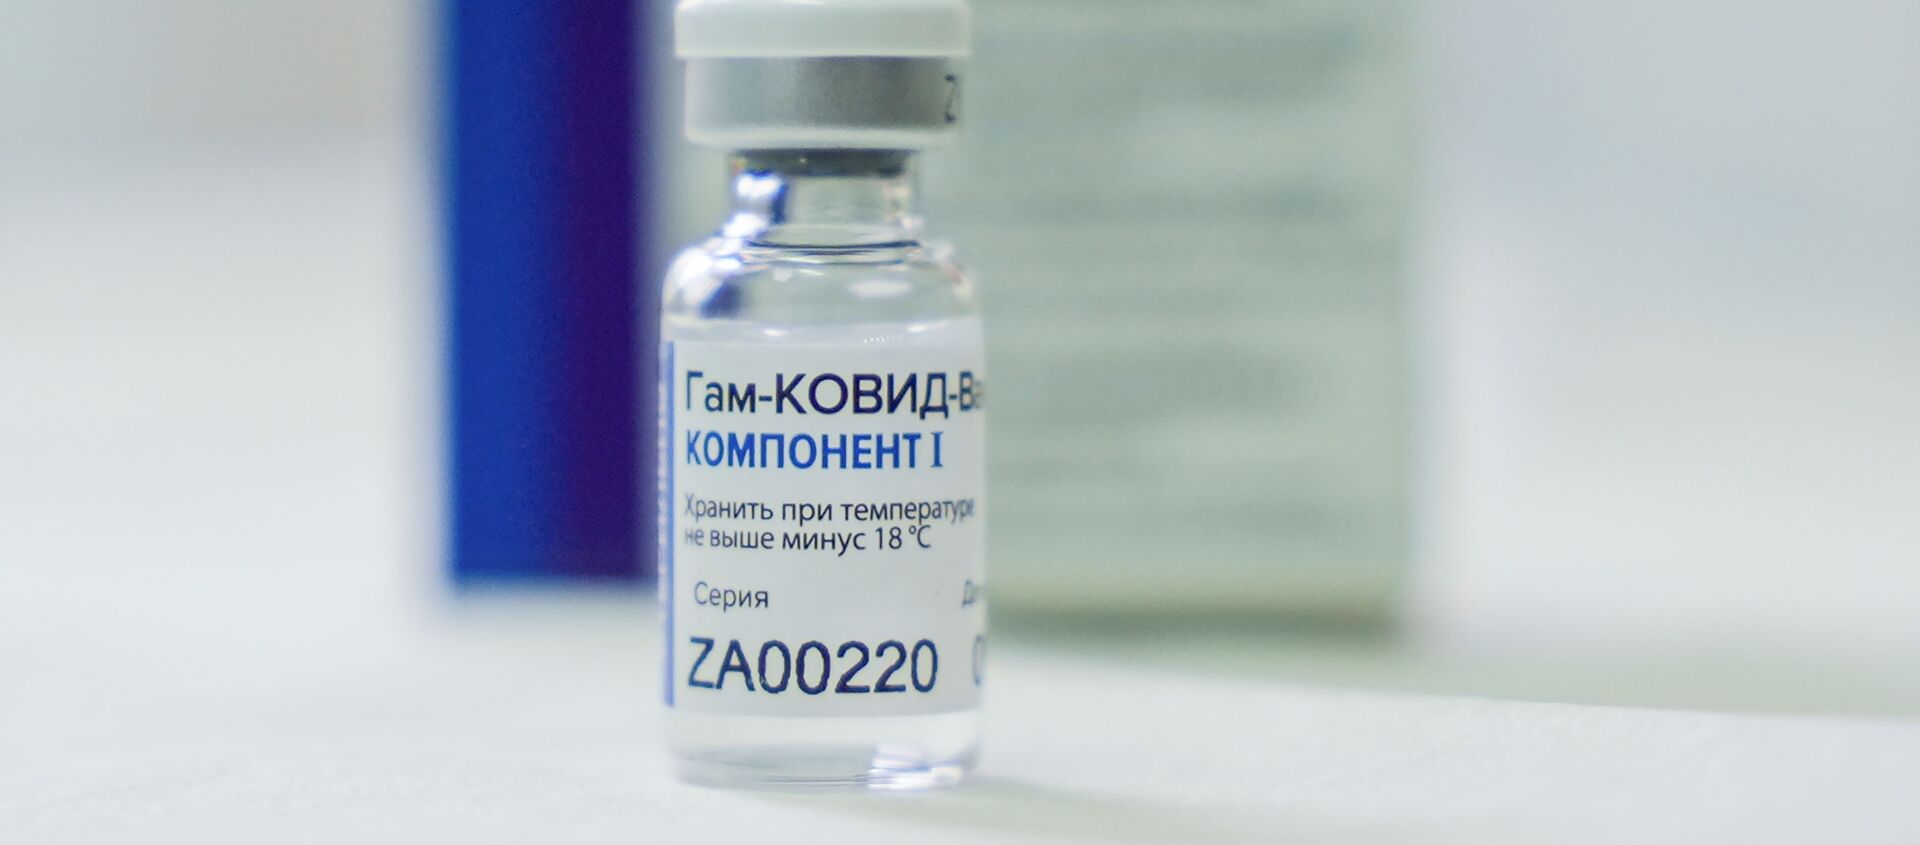 A vial of the Russian Sputnik V coronavirus vaccine is pictured in Belgrade, Serbia, January 6, 2021. - Sputnik International, 1920, 09.02.2021